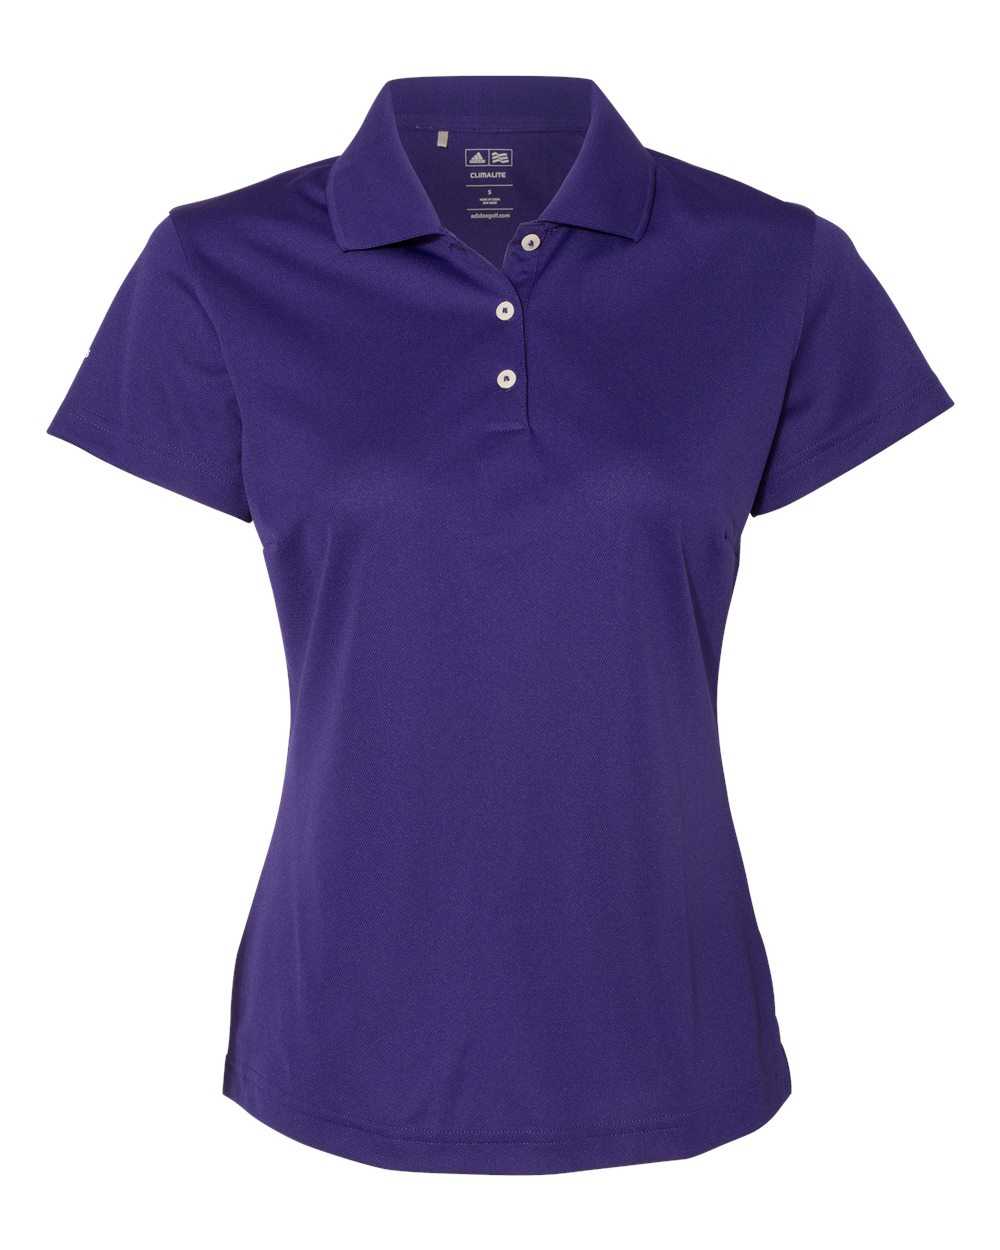 Adidas A131 Women's Basic Sport Shirt - Collegiate Purple White - HIT a Double